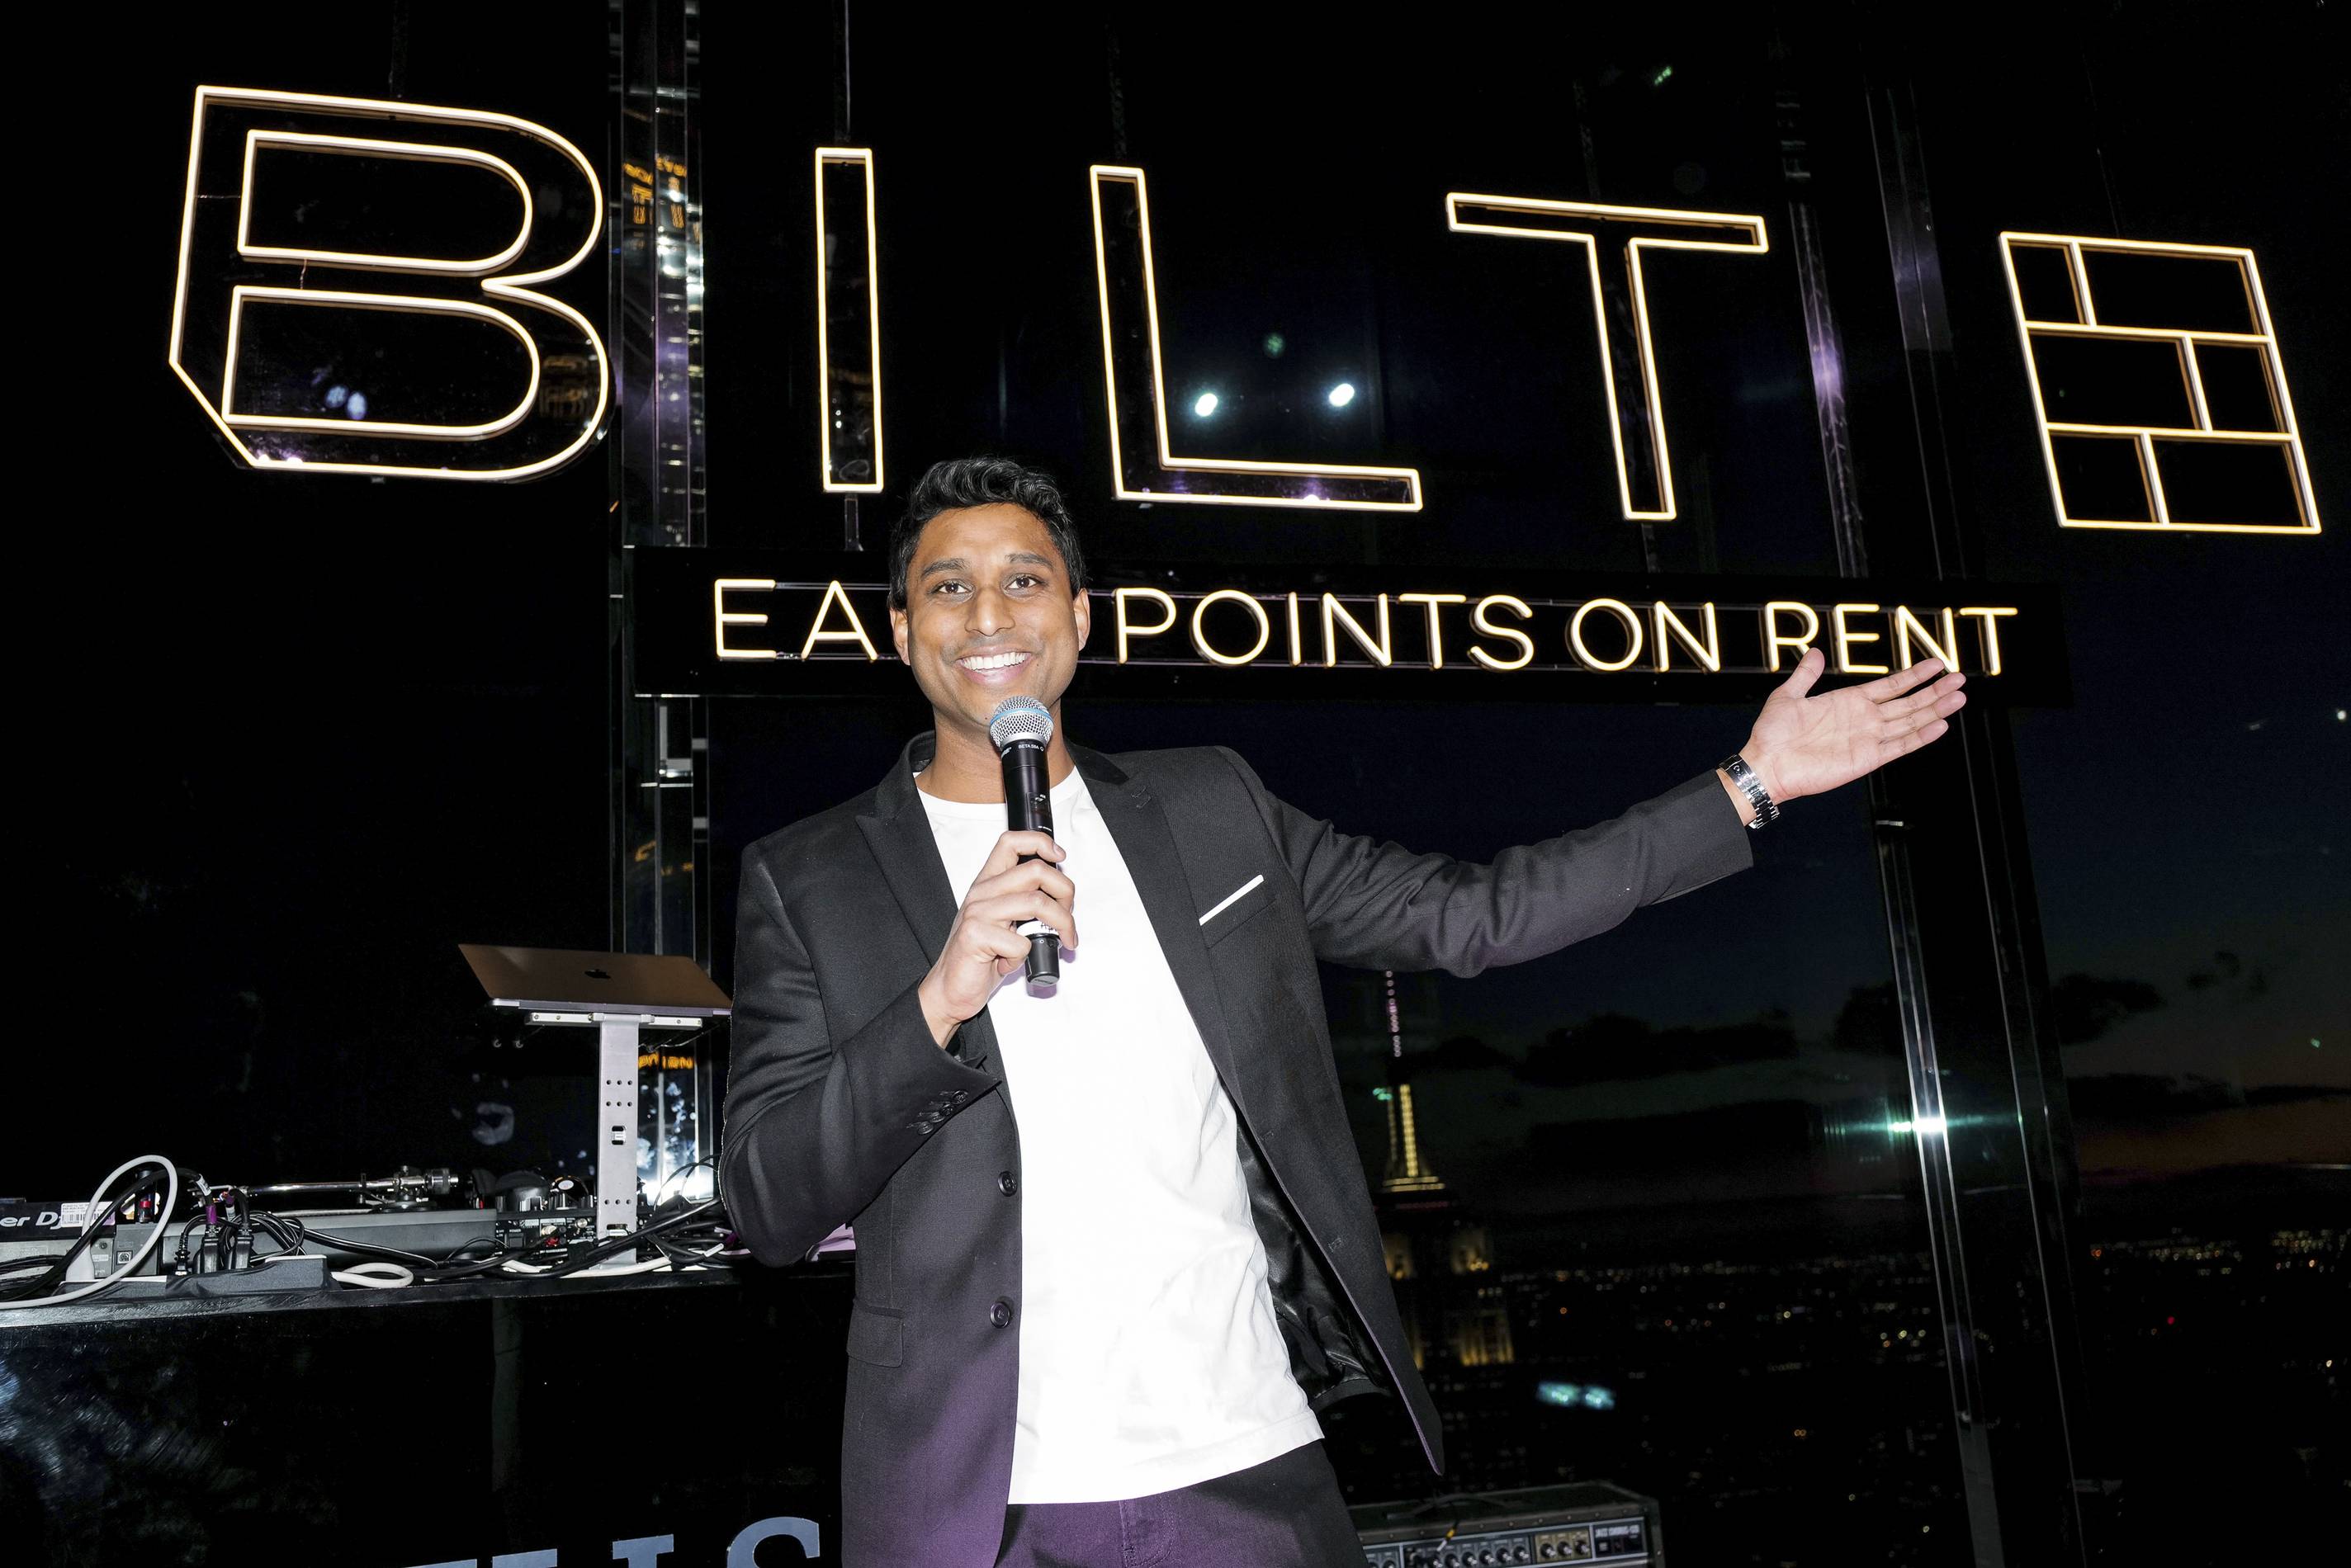 Bilt CEO and Founder Ankur Jain at the Bilt launch party